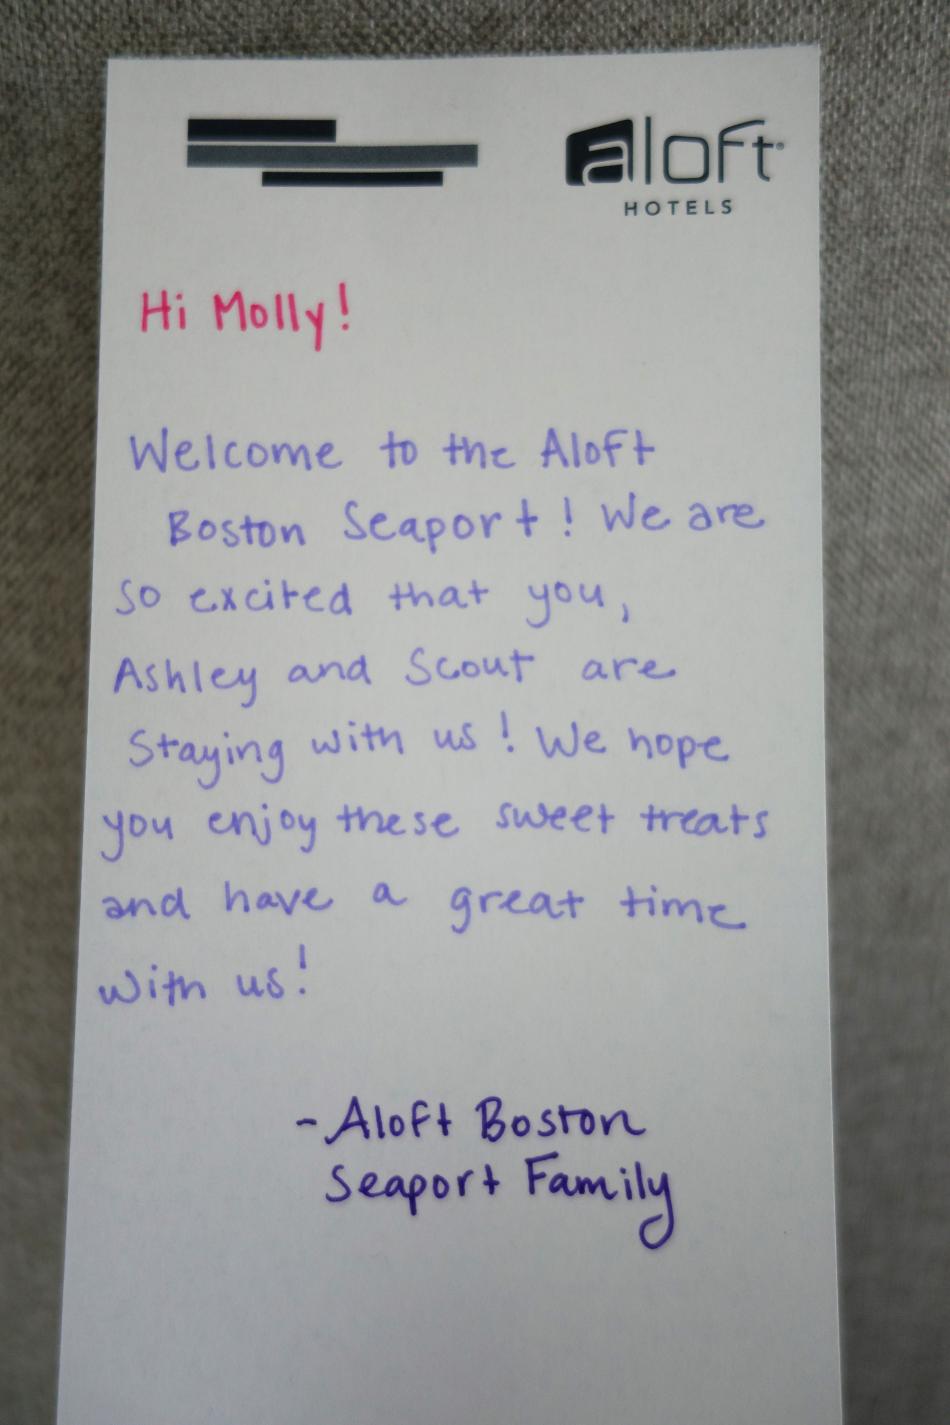 Aloft Boston Seaport